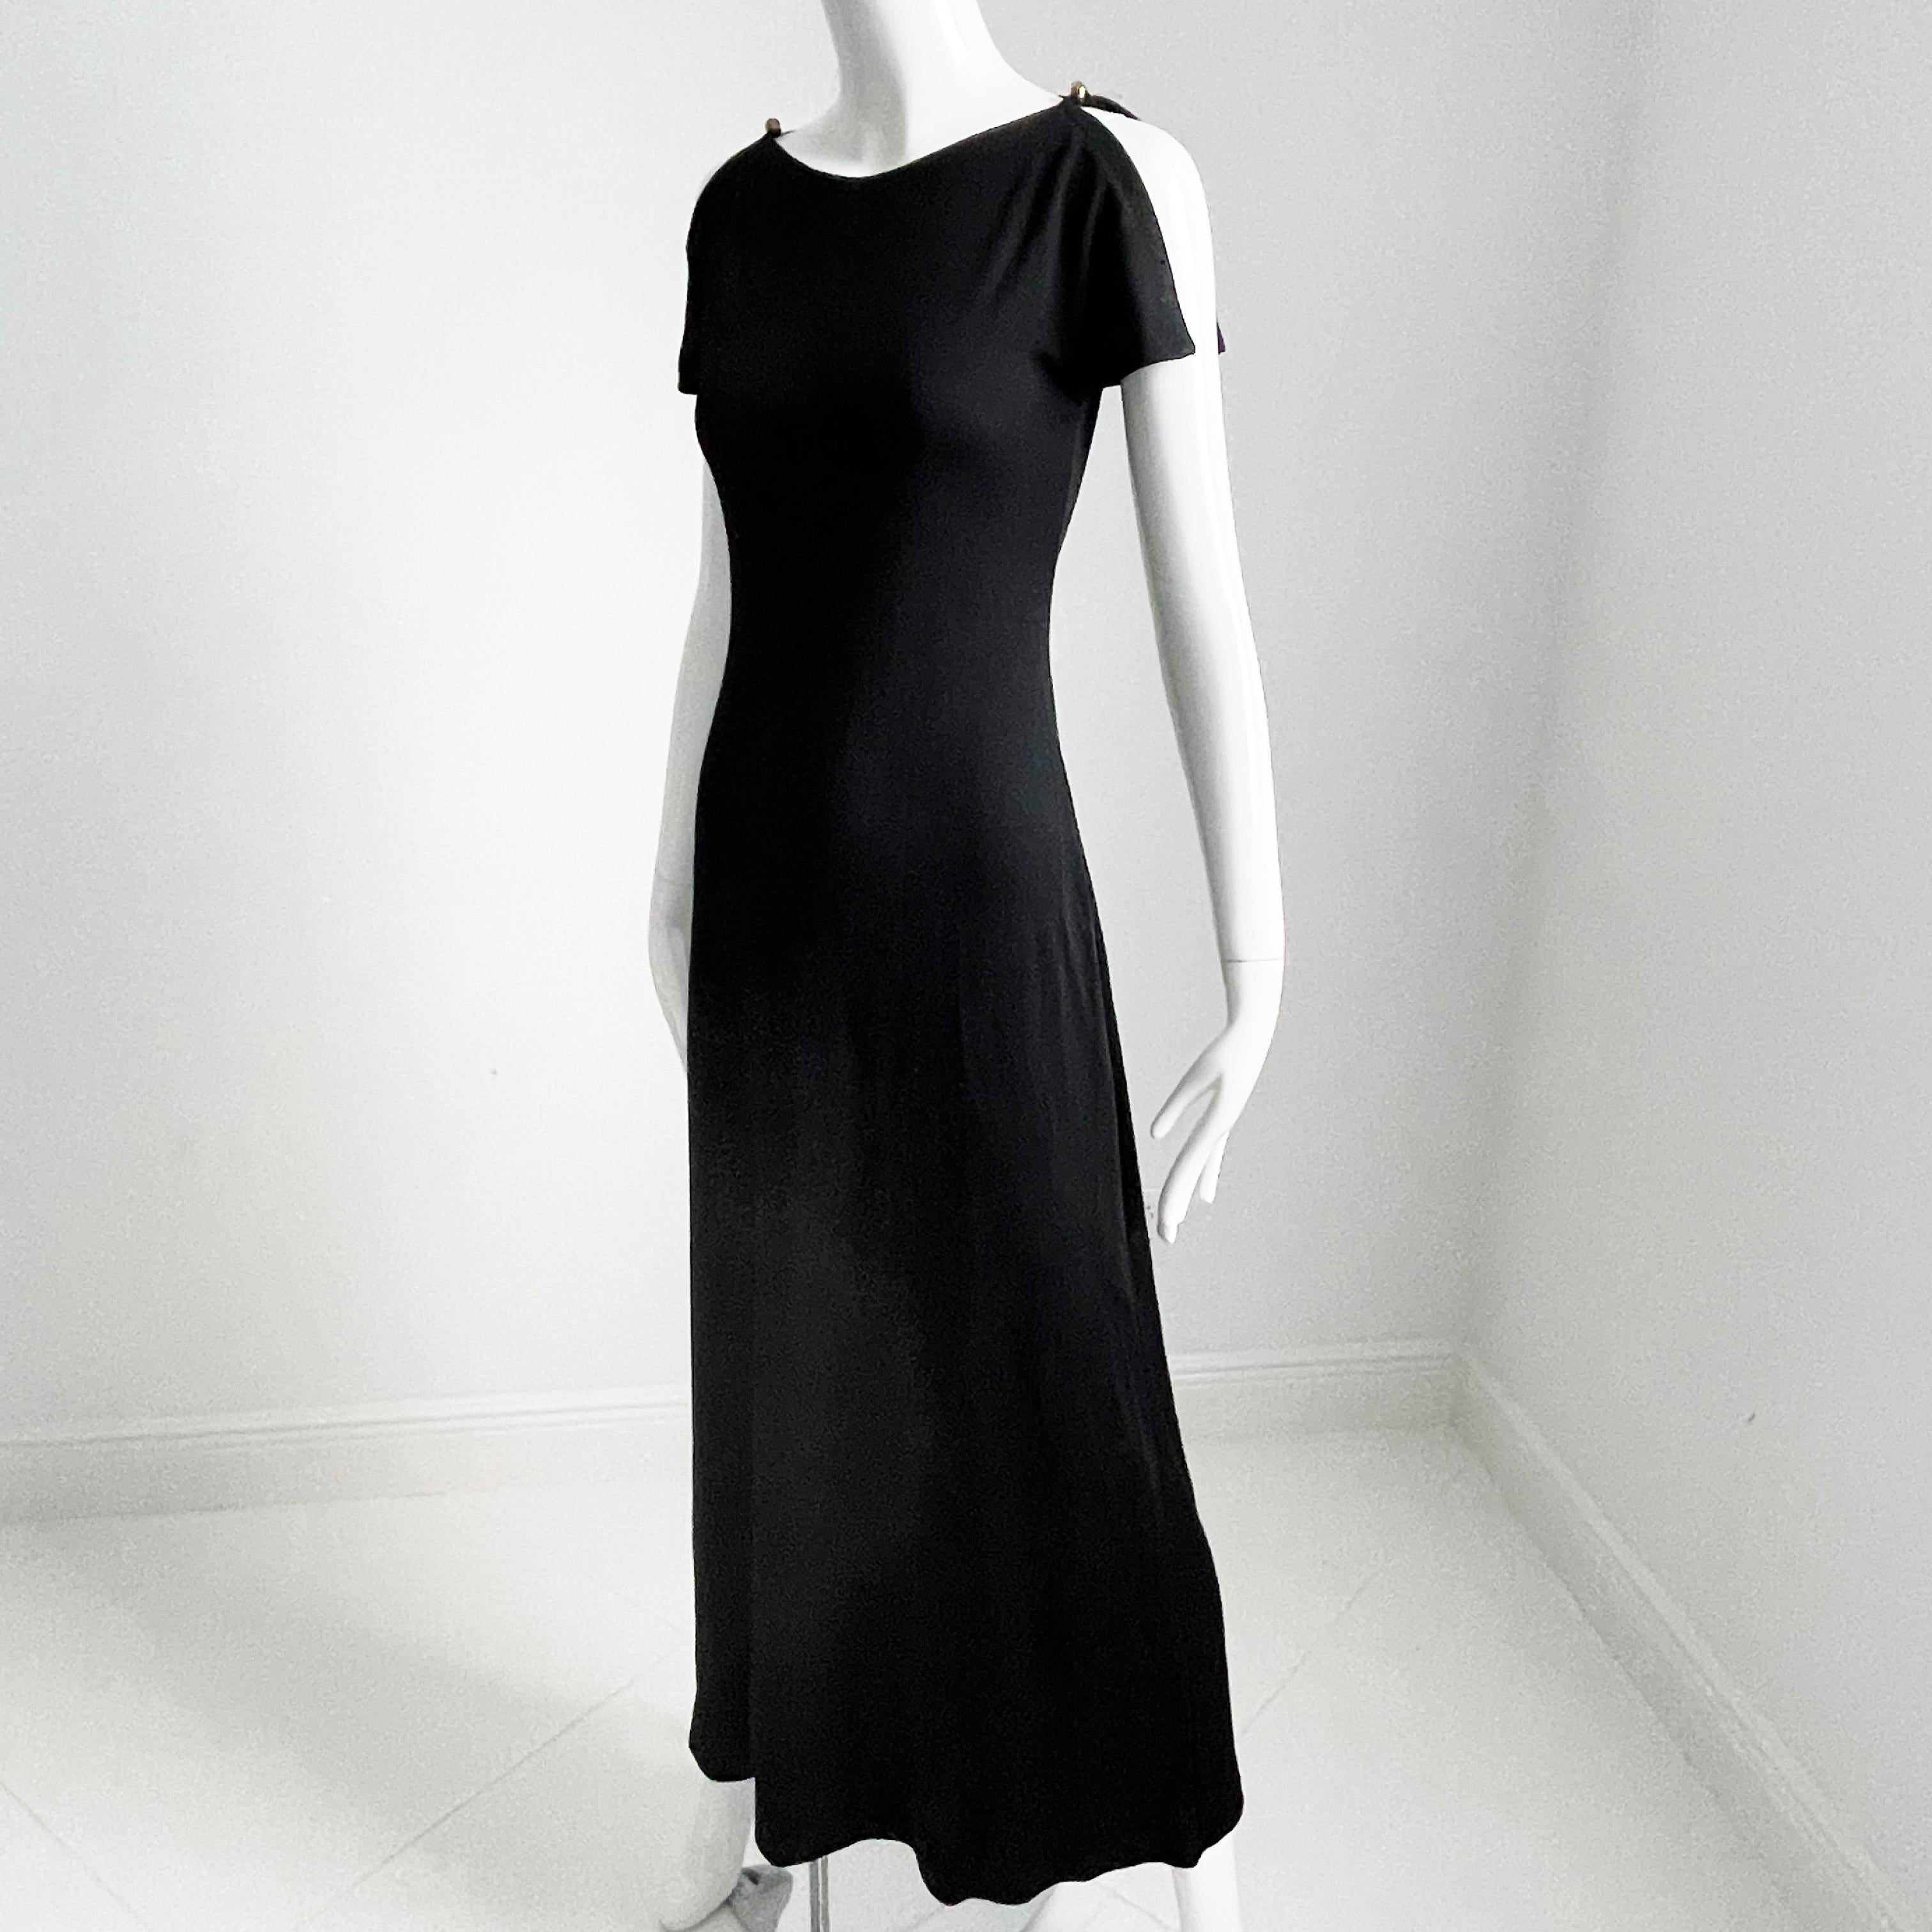 Vintage 70s Ruffinwear by designer Clovis Ruffin 'Ruffinwear' black maxi dress, sold by Saks 5th Avenue for their 